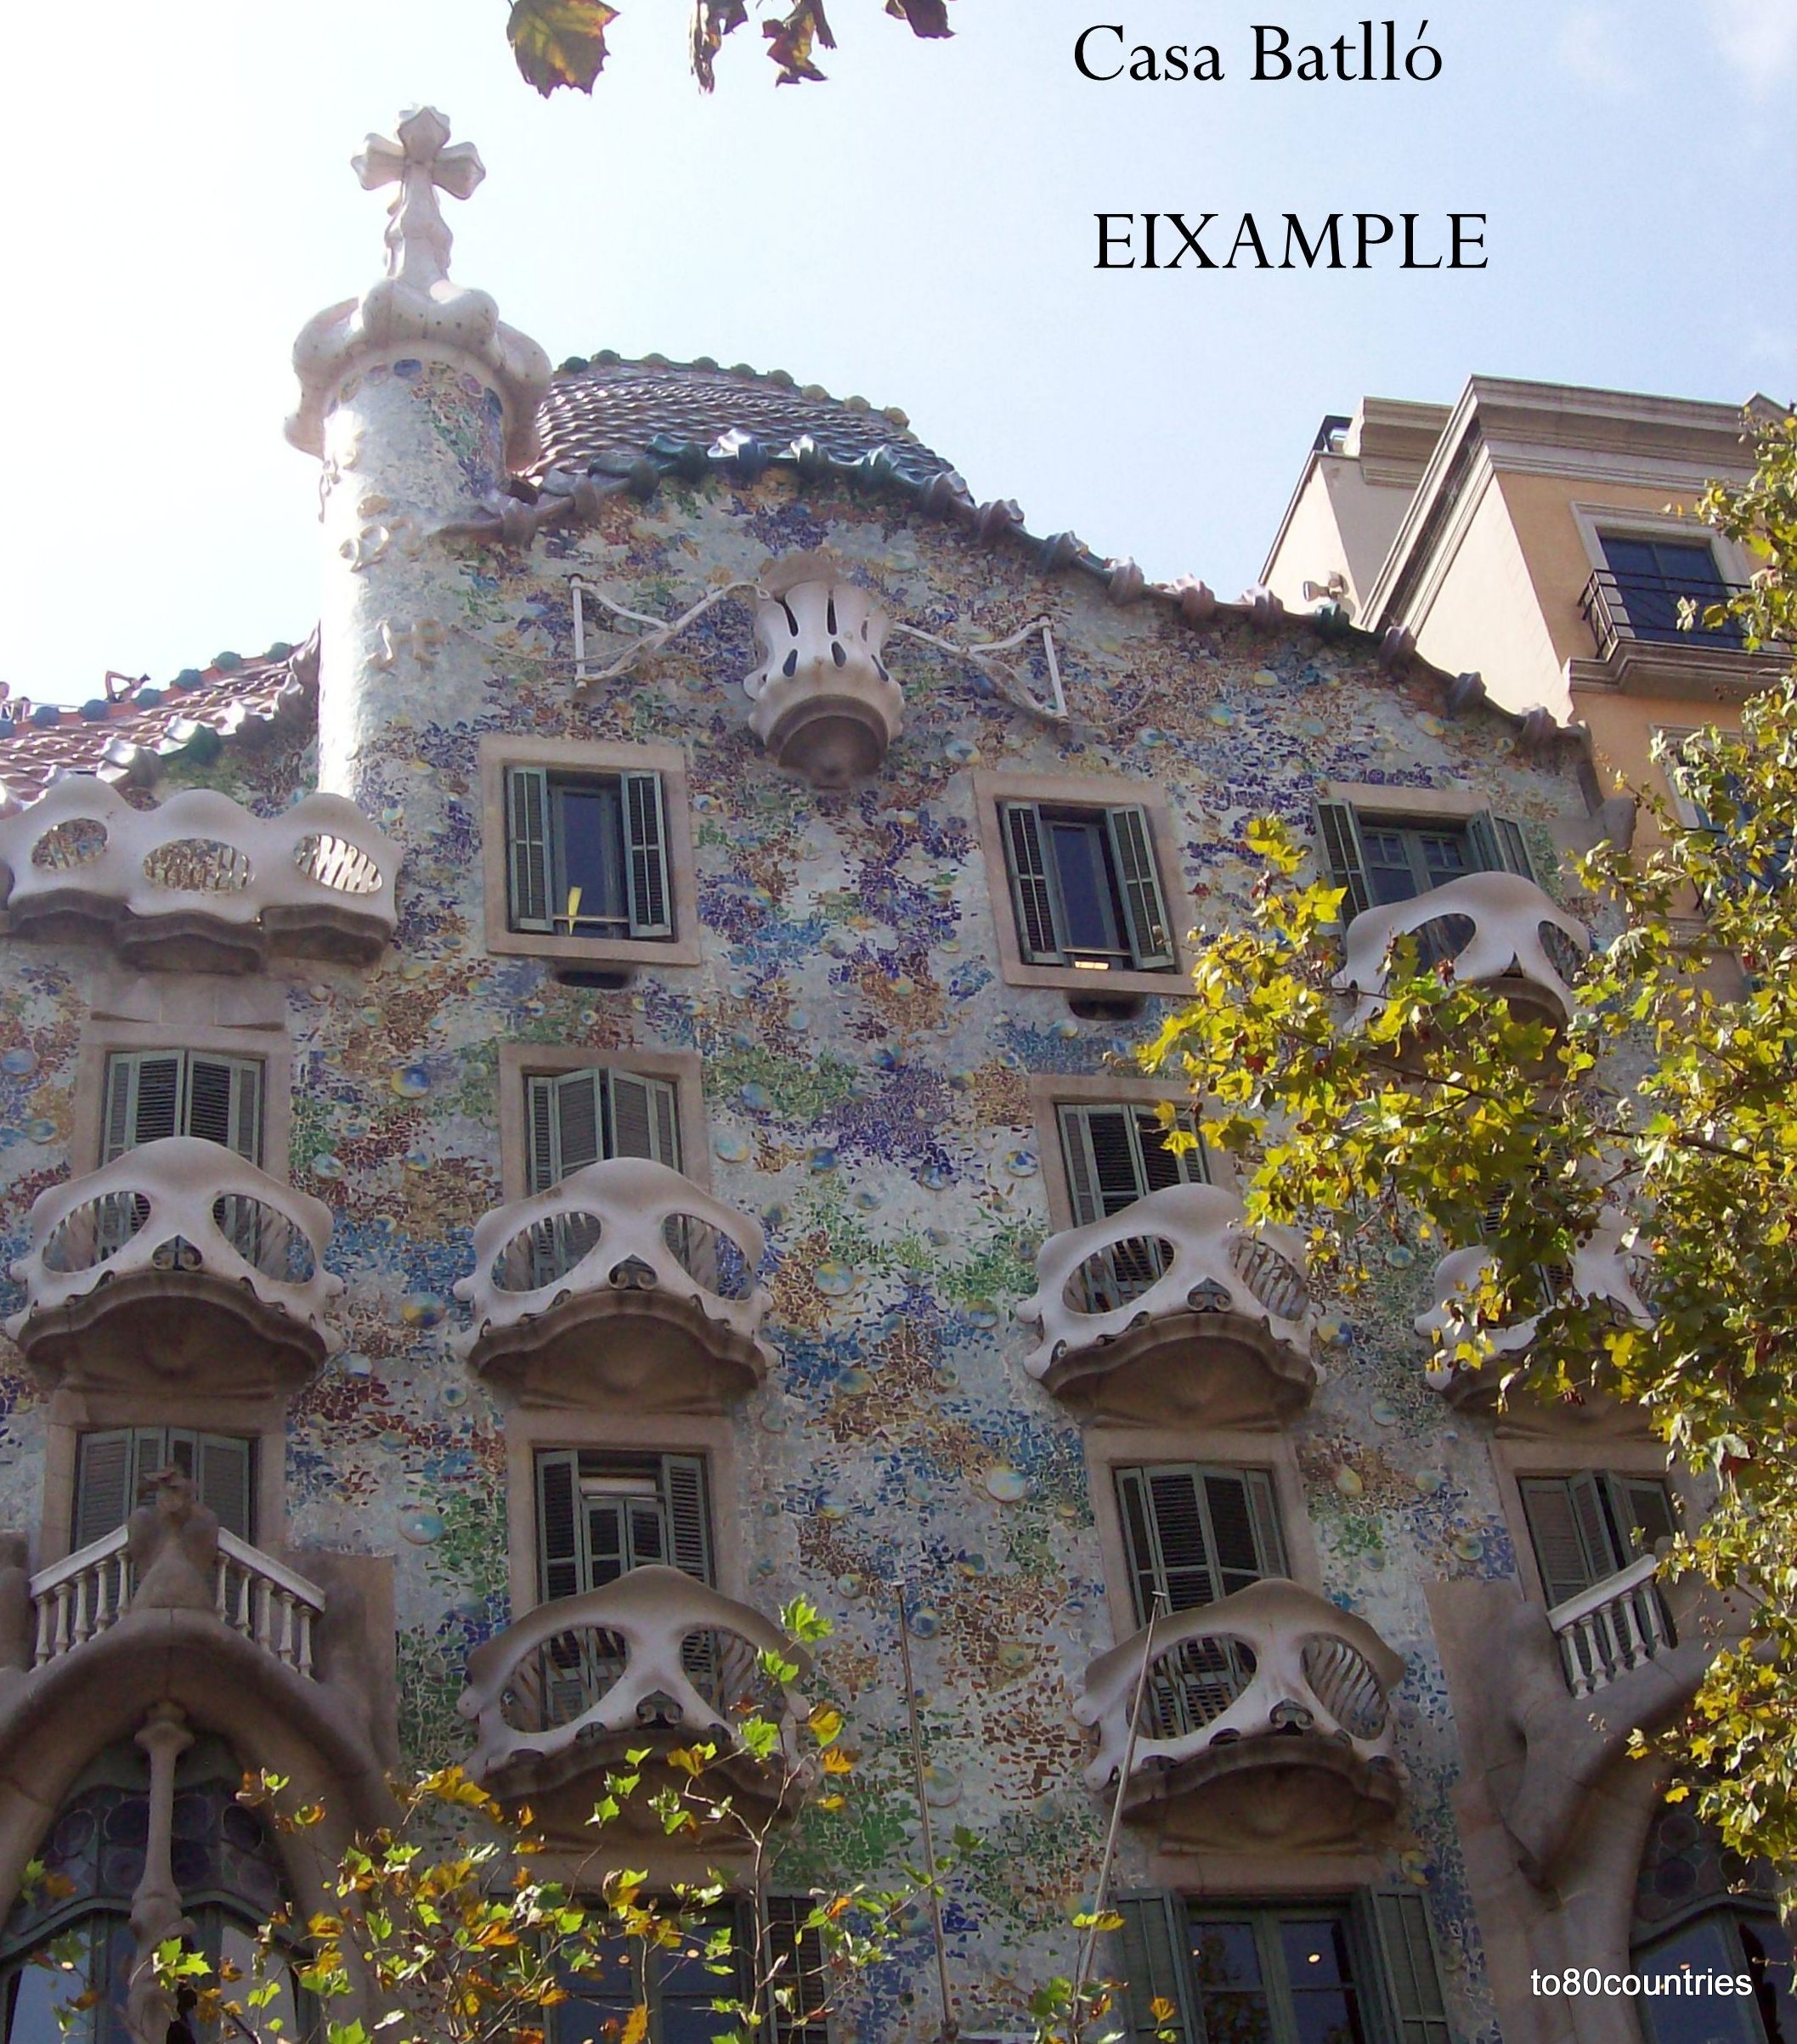 "Casa Battló" von Antoni Gaudí